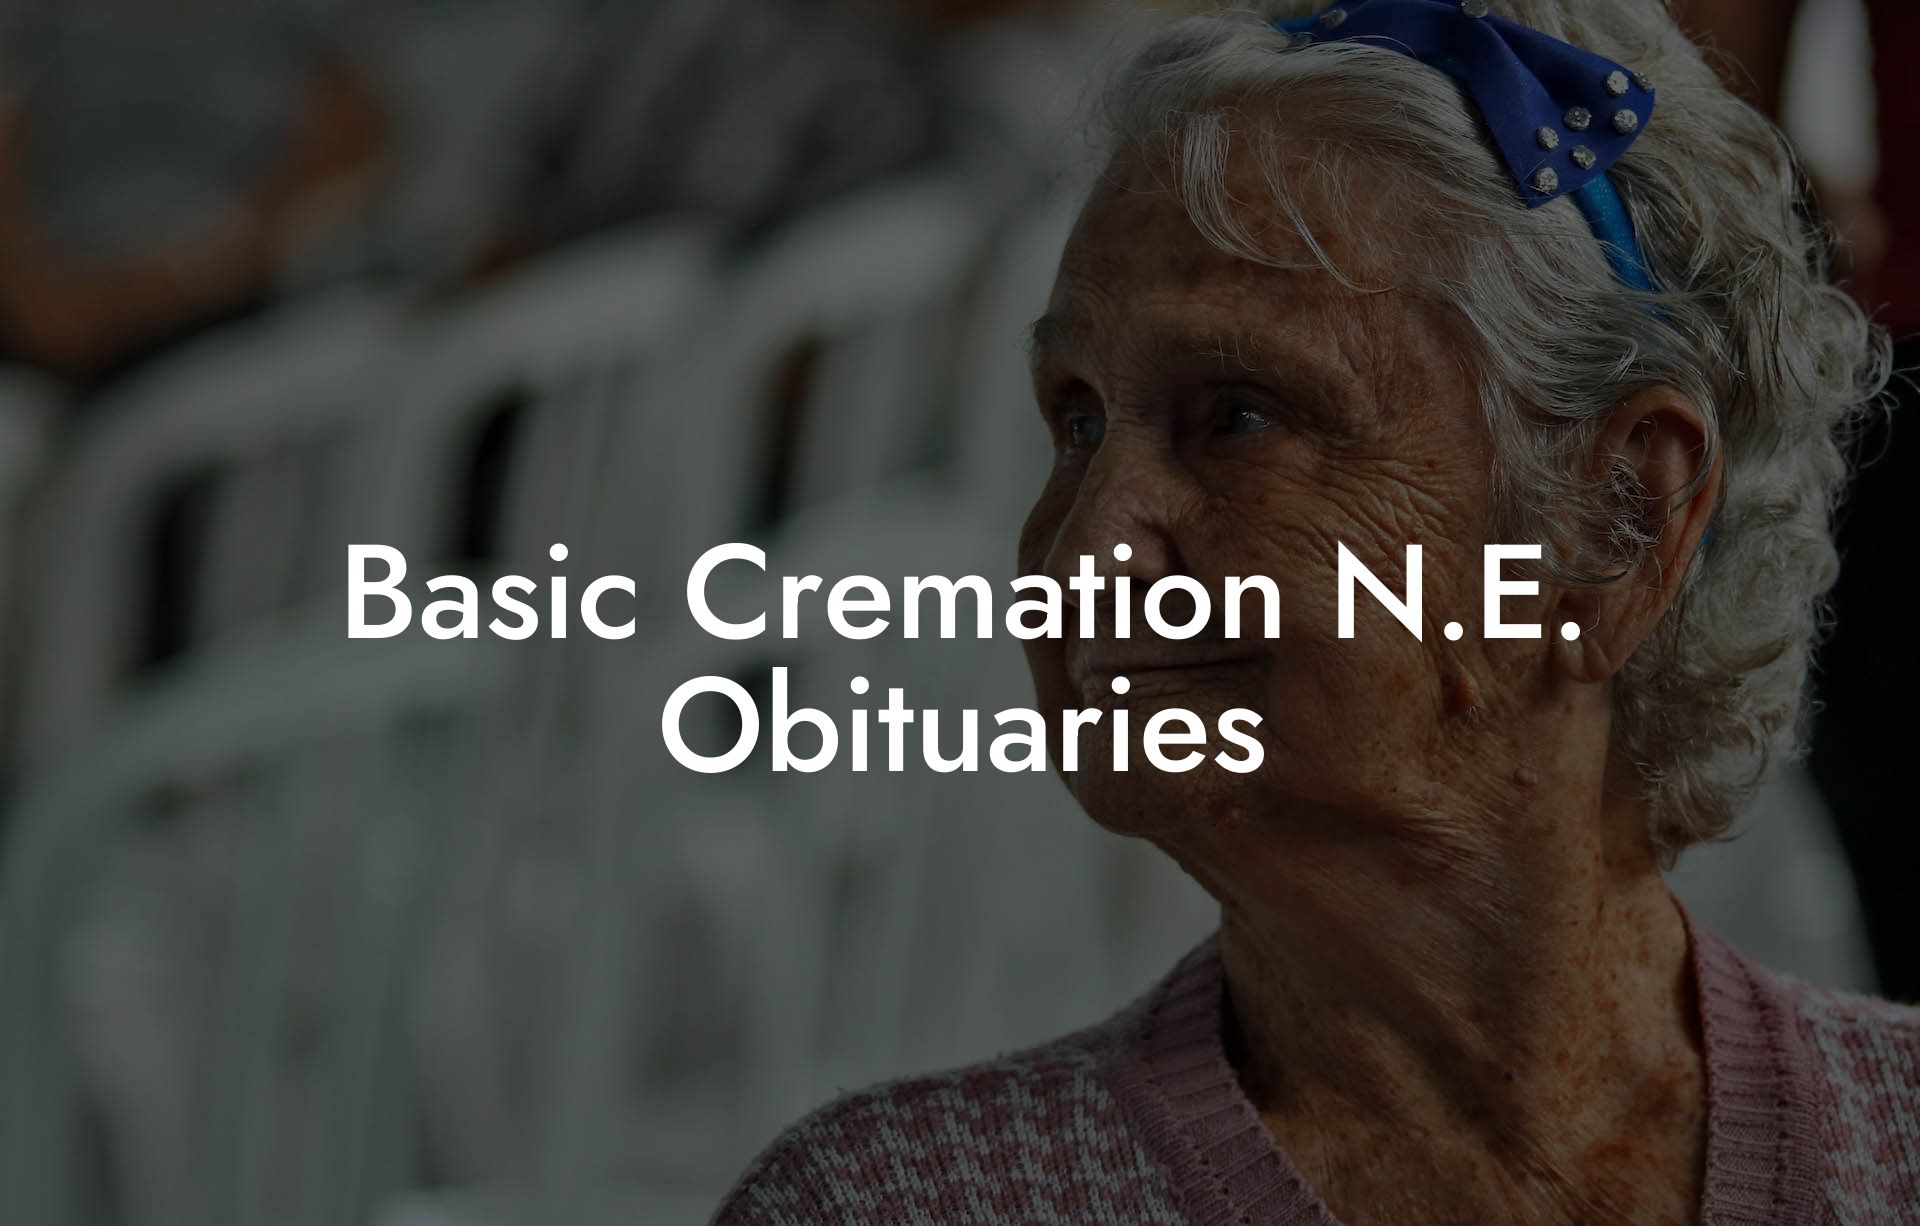 Basic Cremation N.E. Obituaries